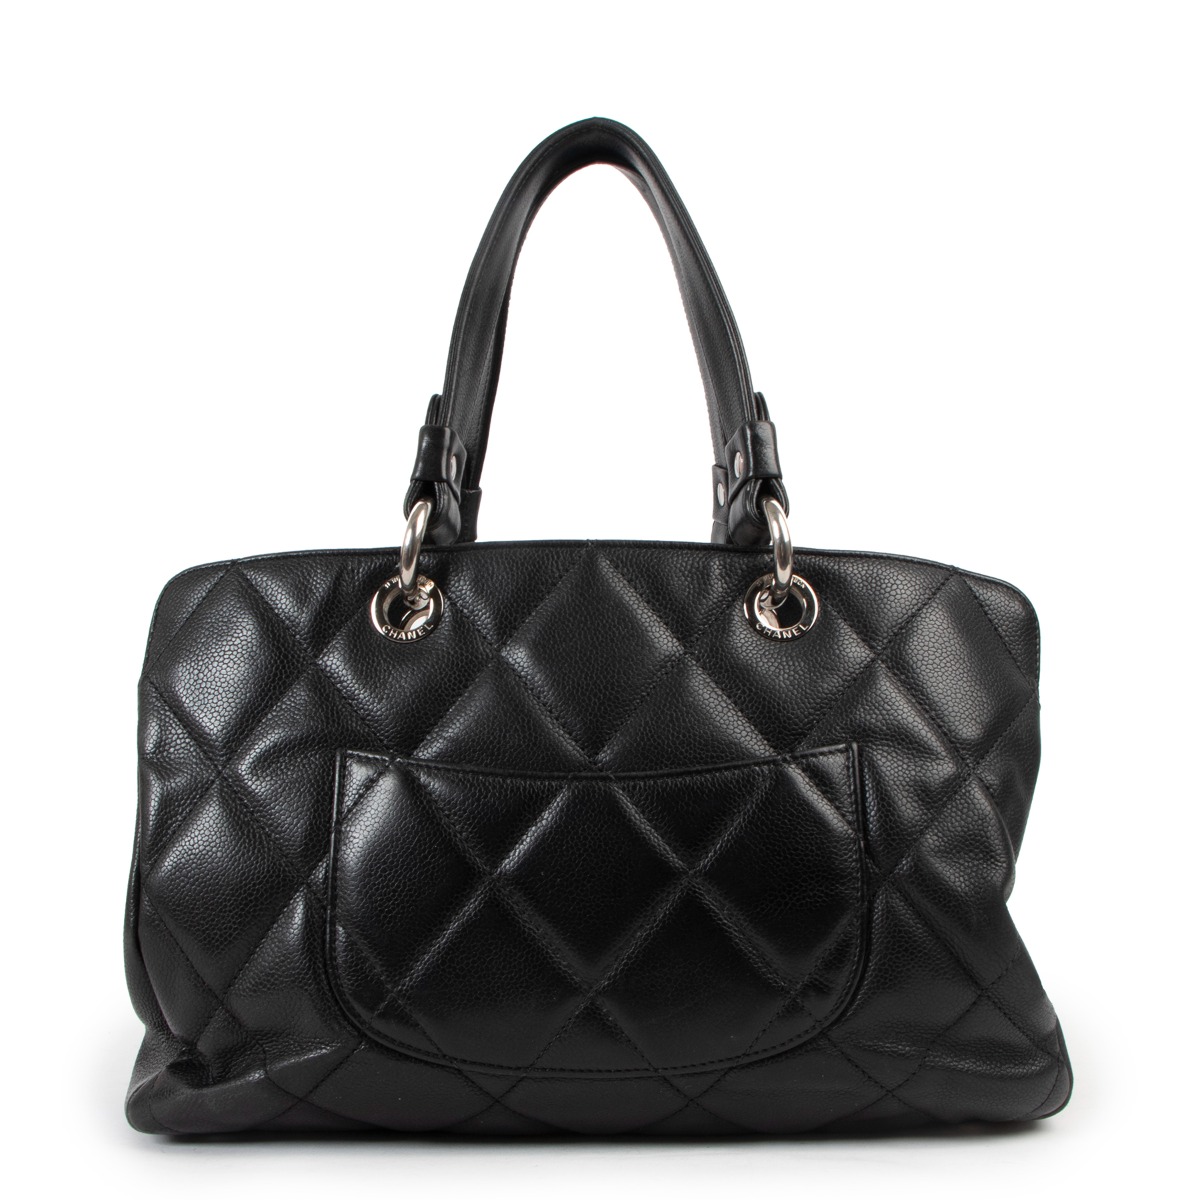 CHANEL. Timeless bag. Black leather. It presents very li…